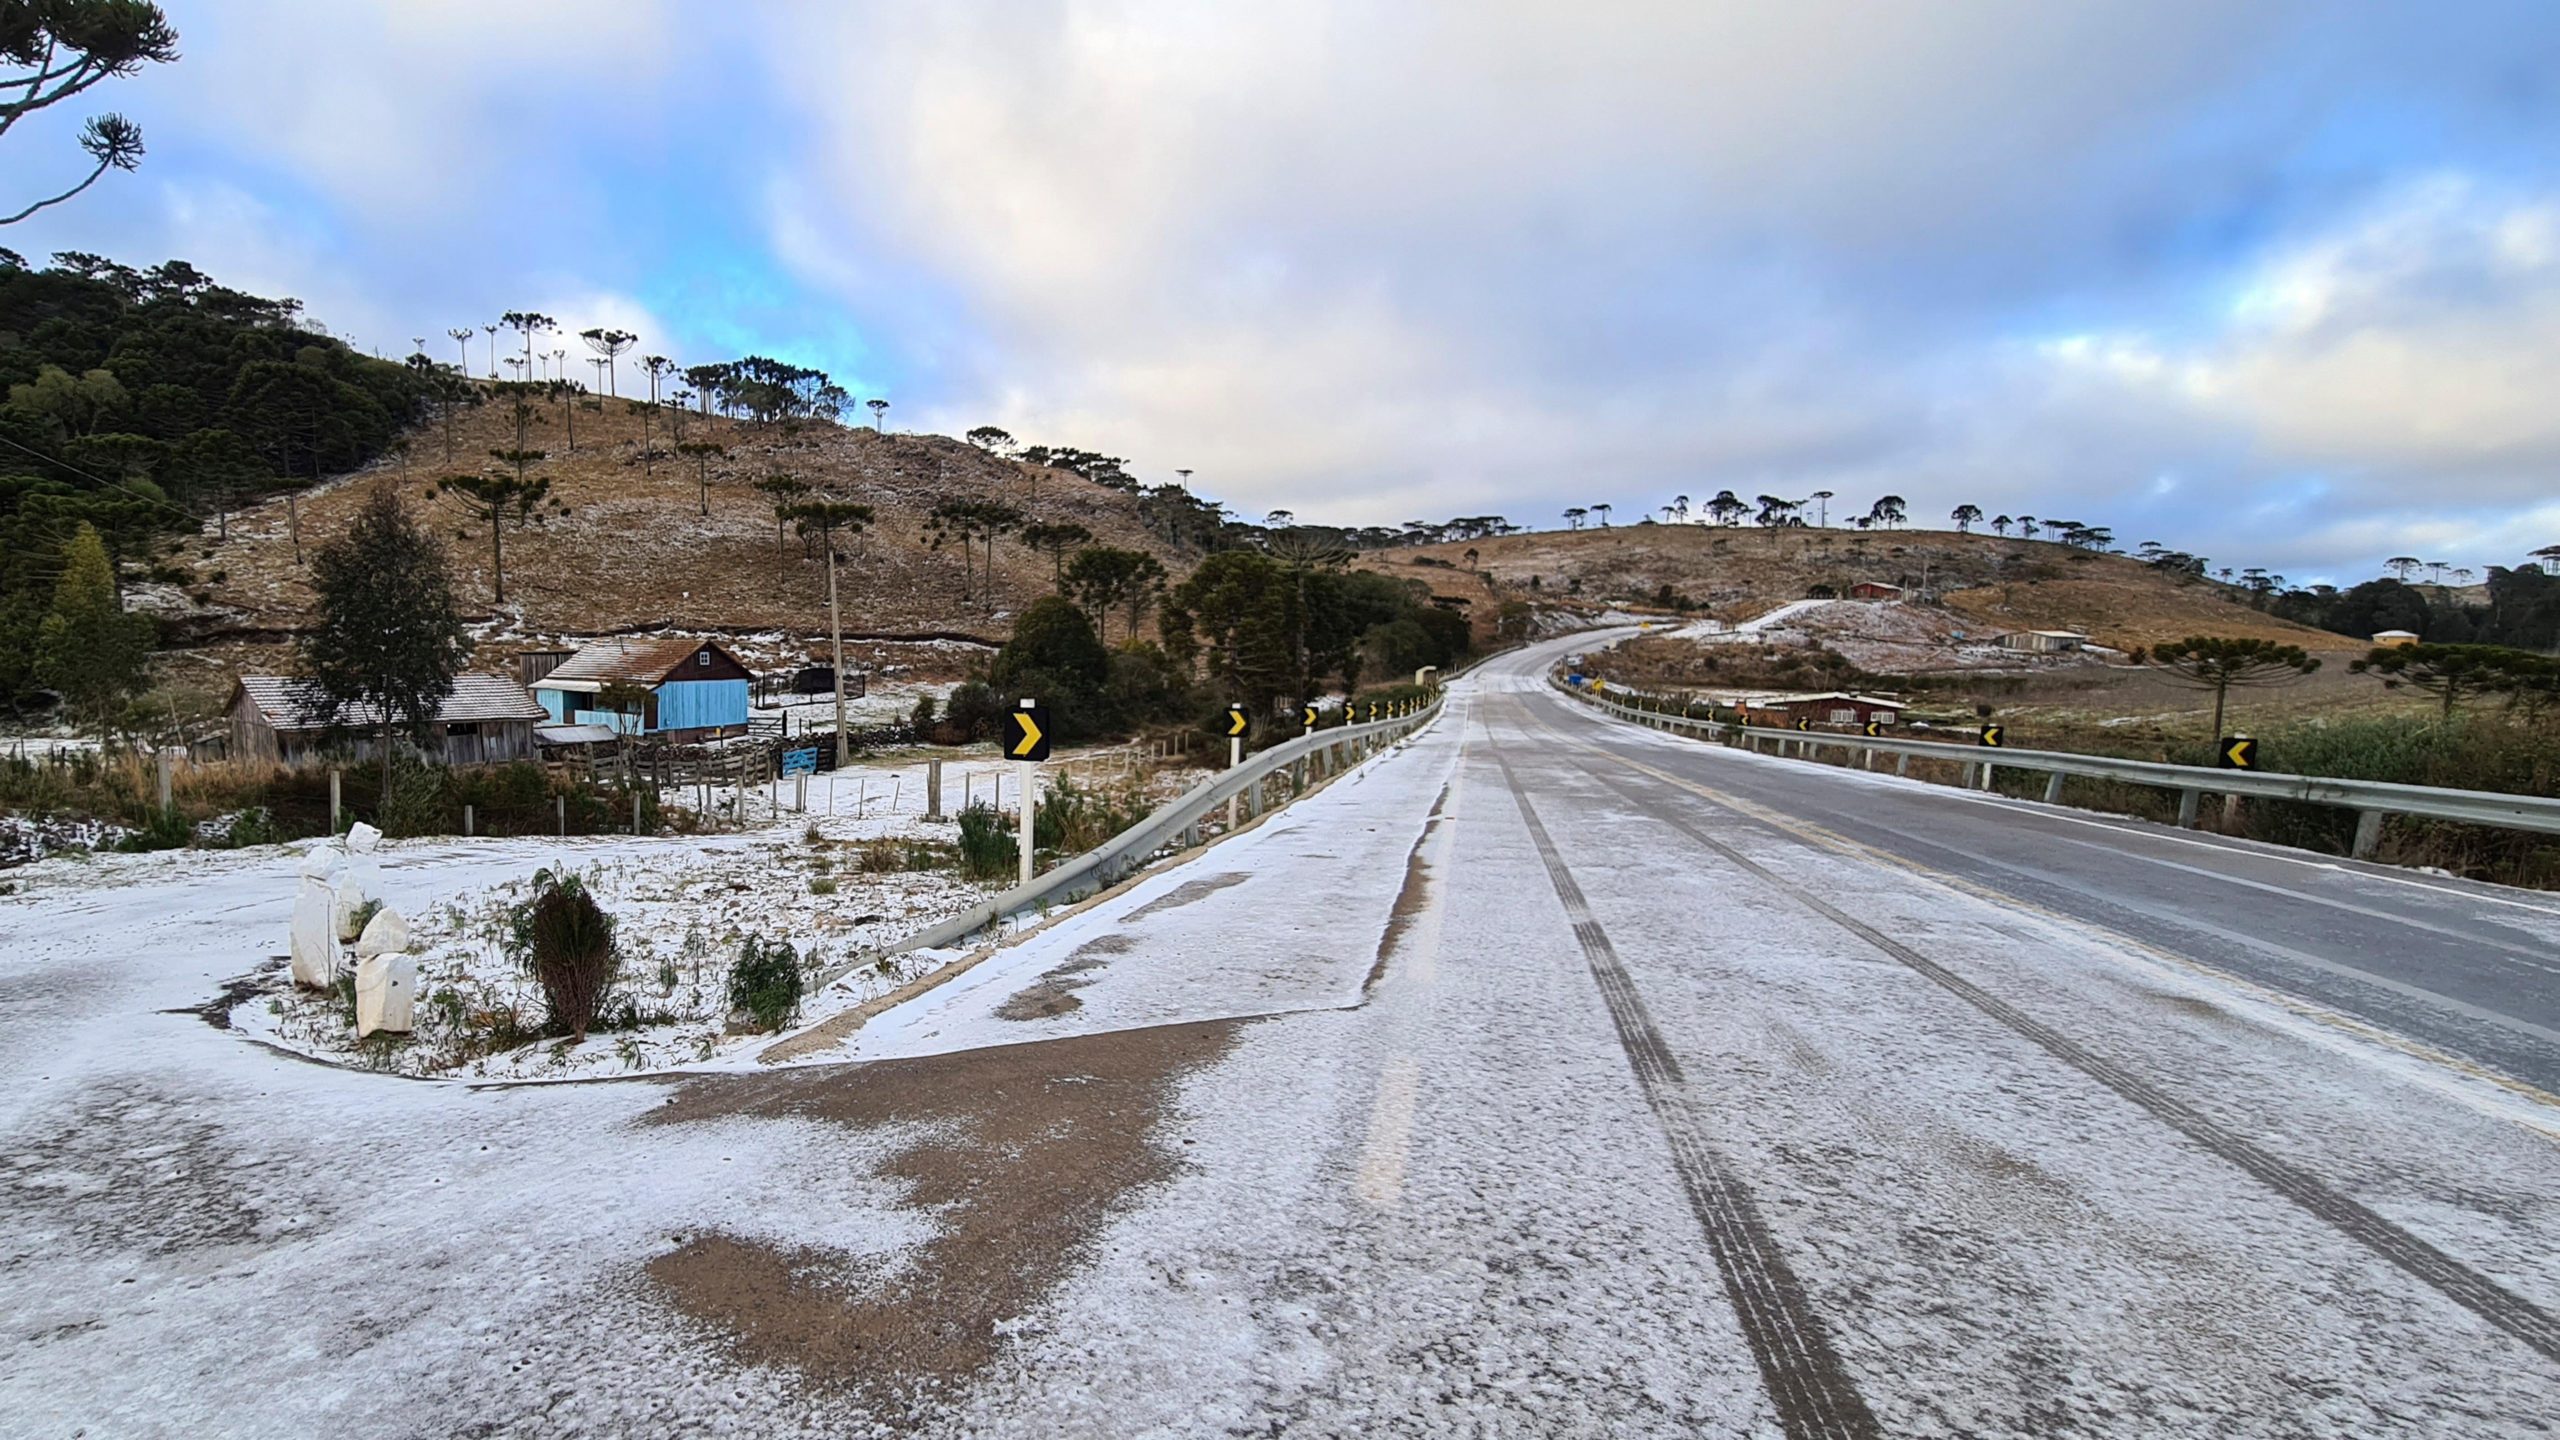 Snow covers a road in Sao Joaquim, Brazil, Thursday, July 29, 2021. (Photo: Mycchel Legnaghi, AP)